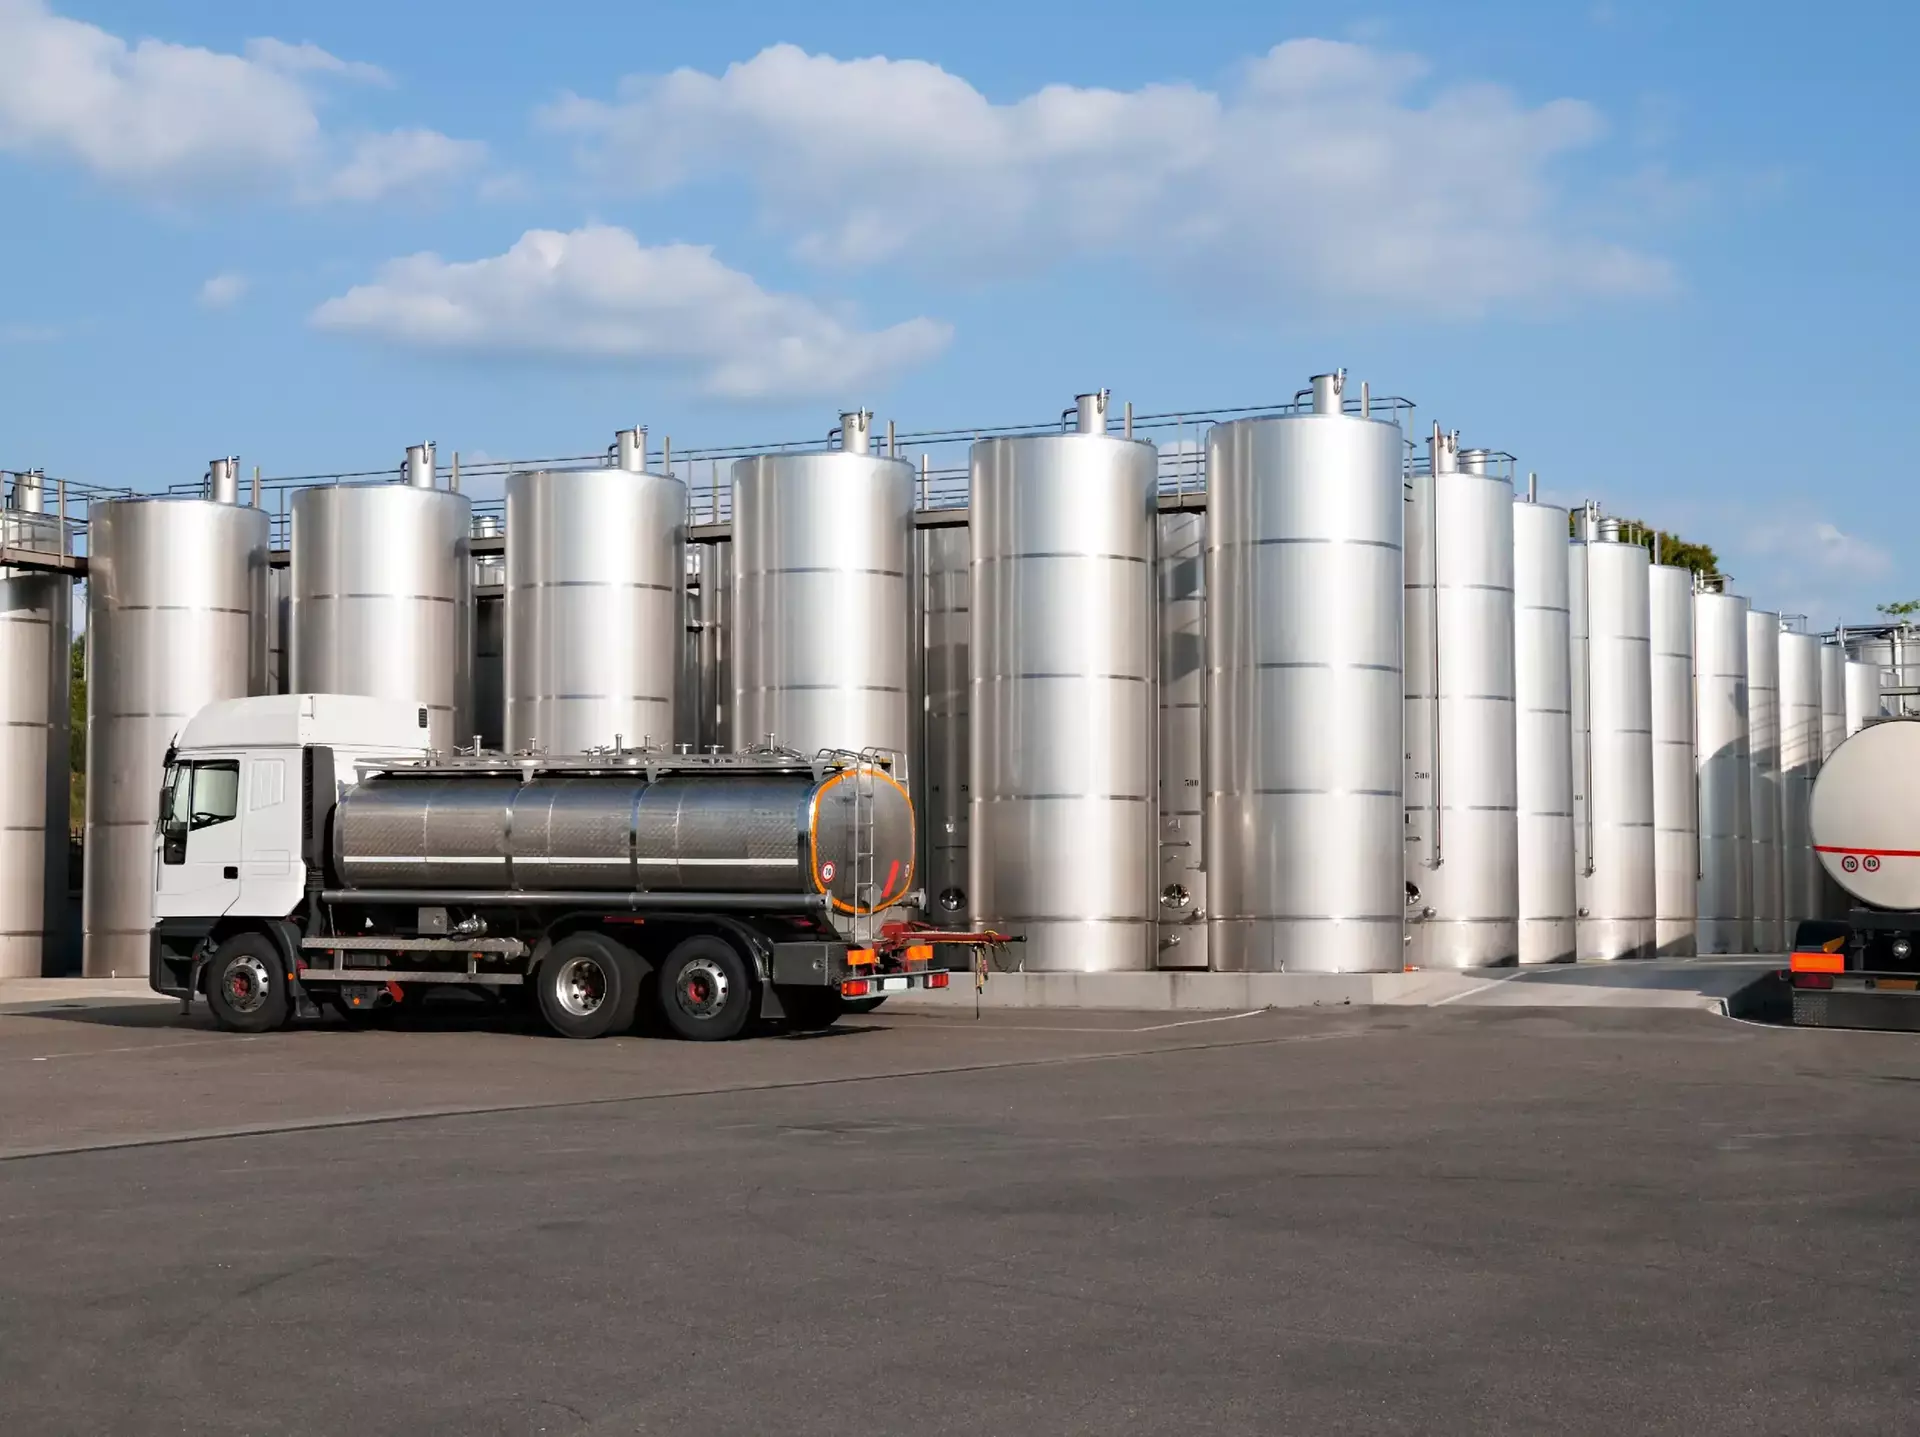 Milk storage tanks and trucks